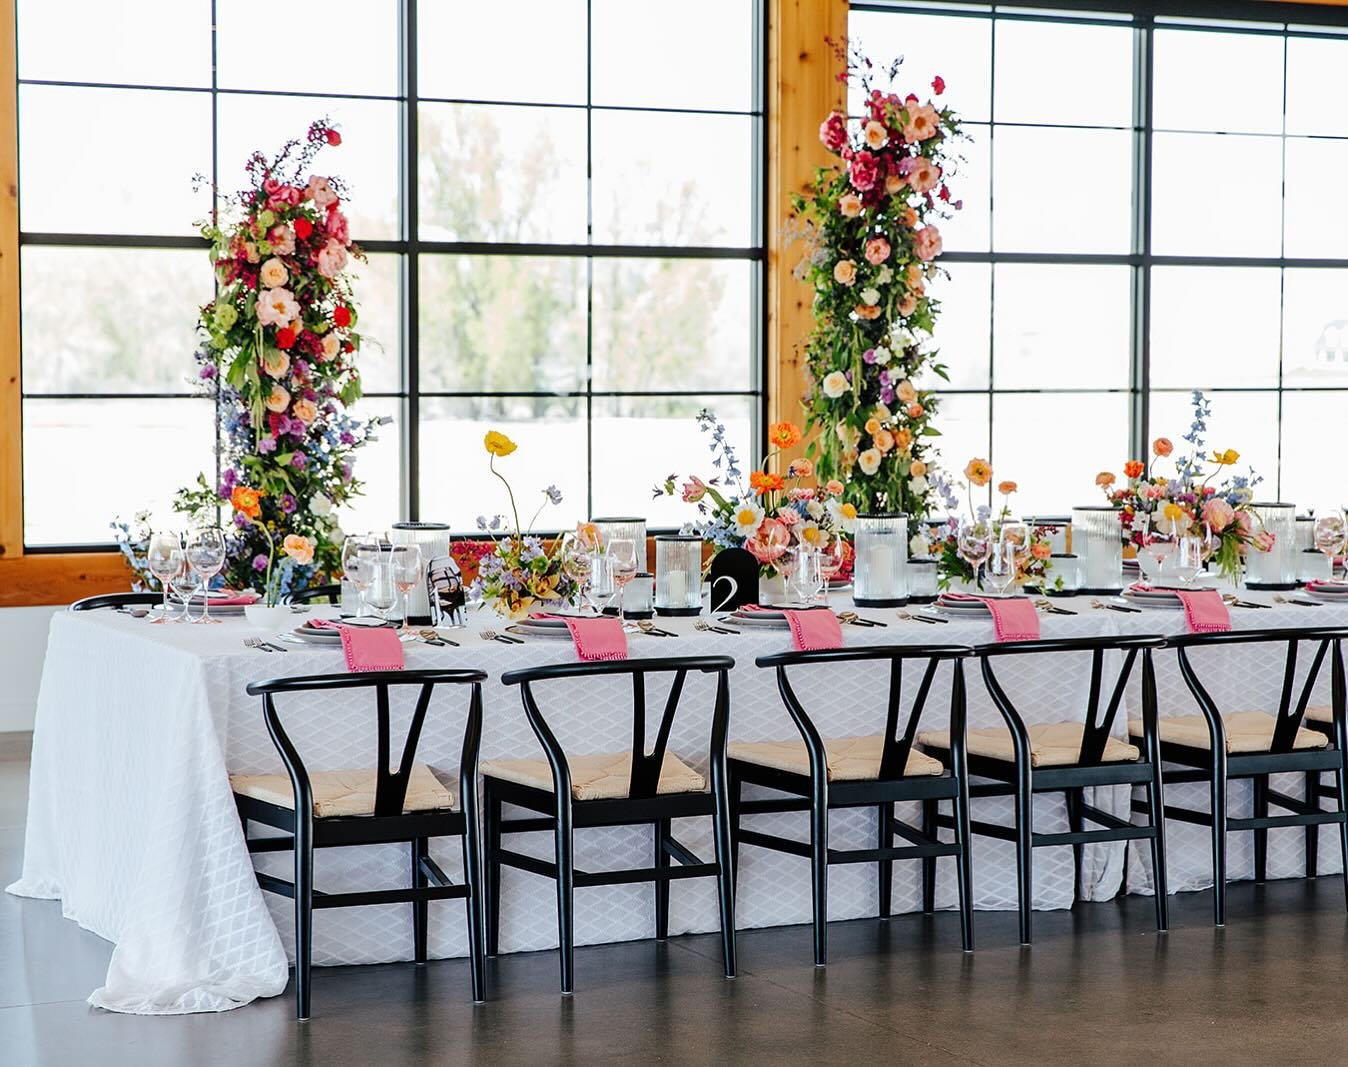 Bright, colorful head tables are sure to wow your guests!Photographer: @quincys.photos 
Videographer: @rnfilmco 
Venue: @deerflatranch 
Florist: @floret.designstudio 
Tabletop rentals: @thelittlegemdetails
Wine glasses &amp; silverware: @afinefete
La